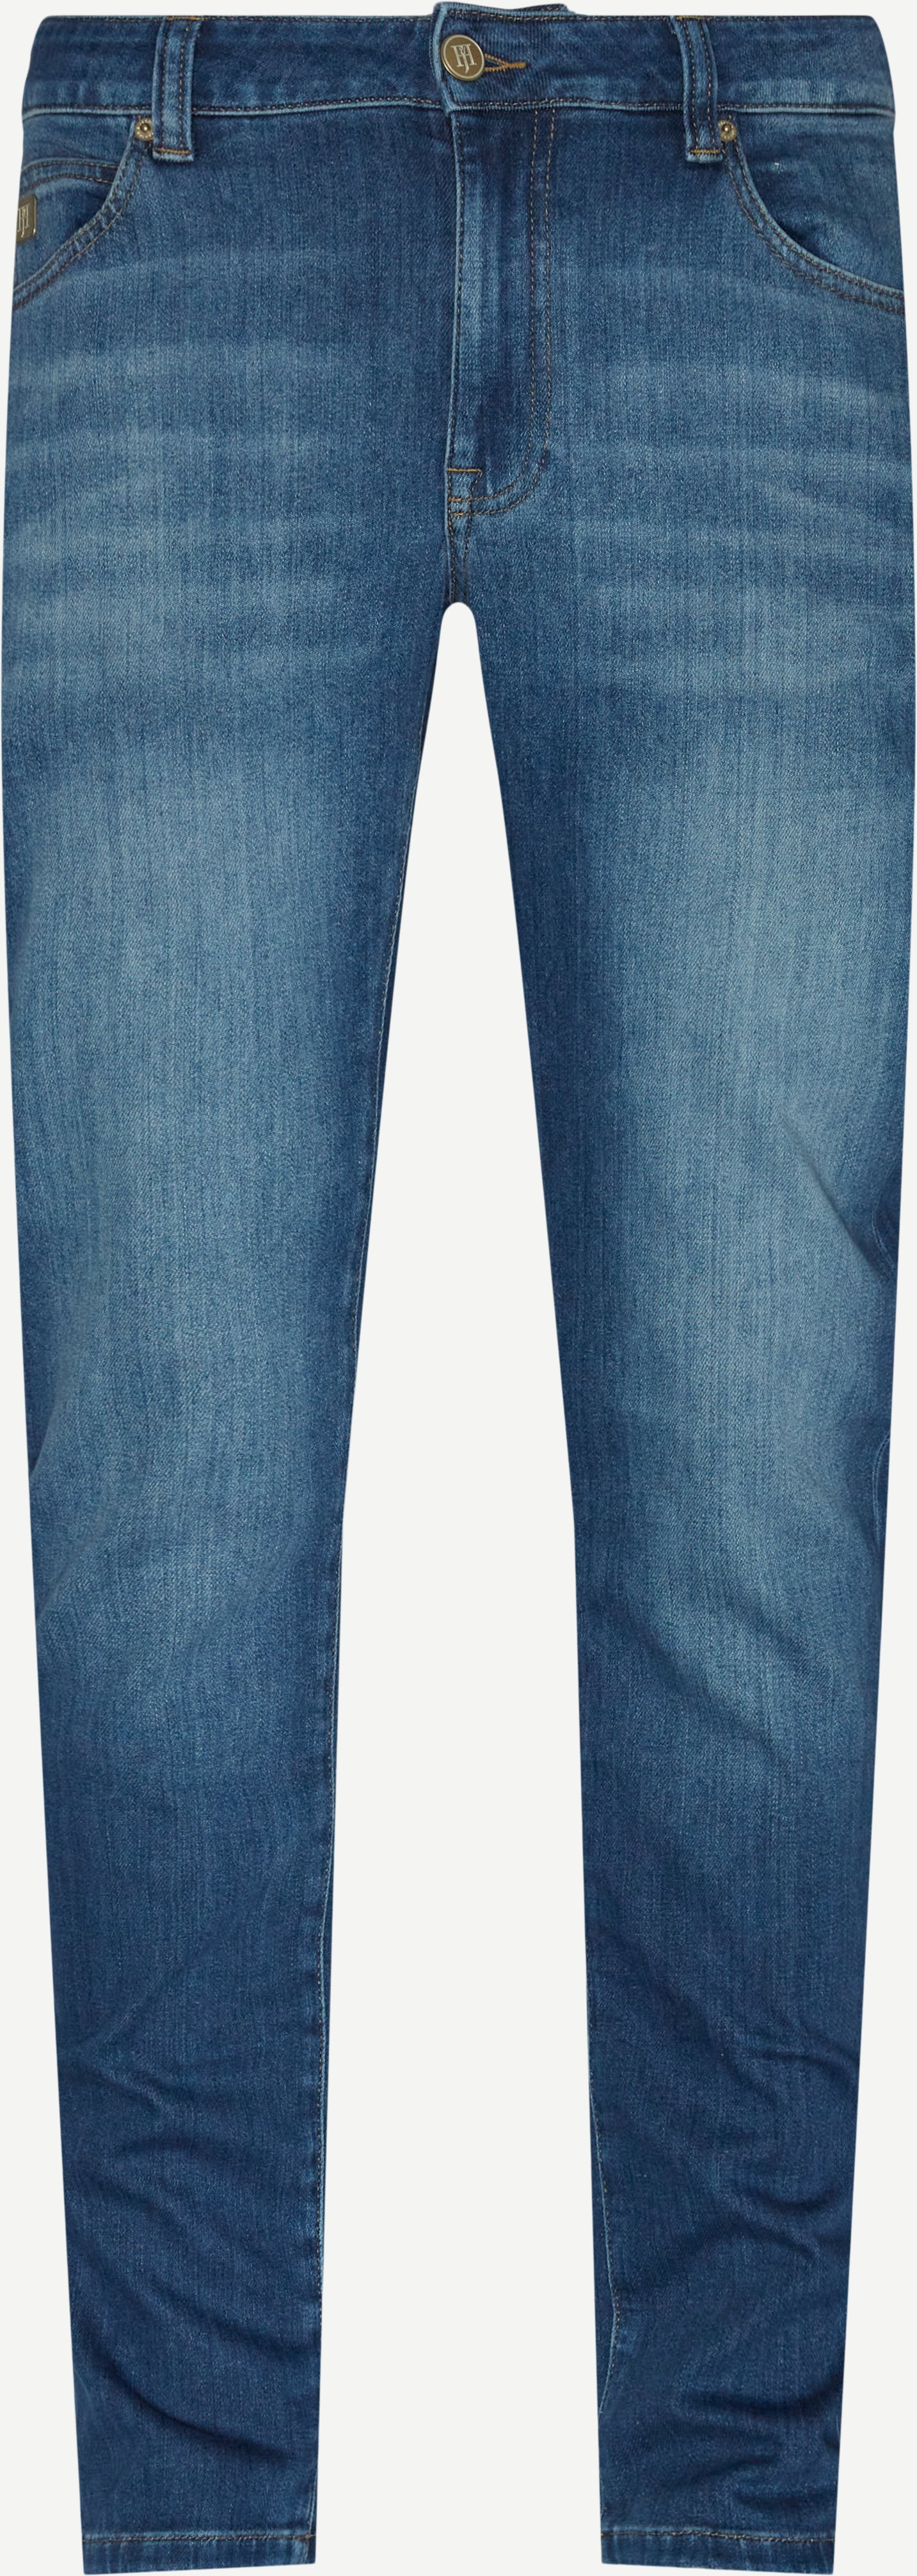 06529 Cape Town Silk Touch Jeans - Jeans - Regular fit - Denim